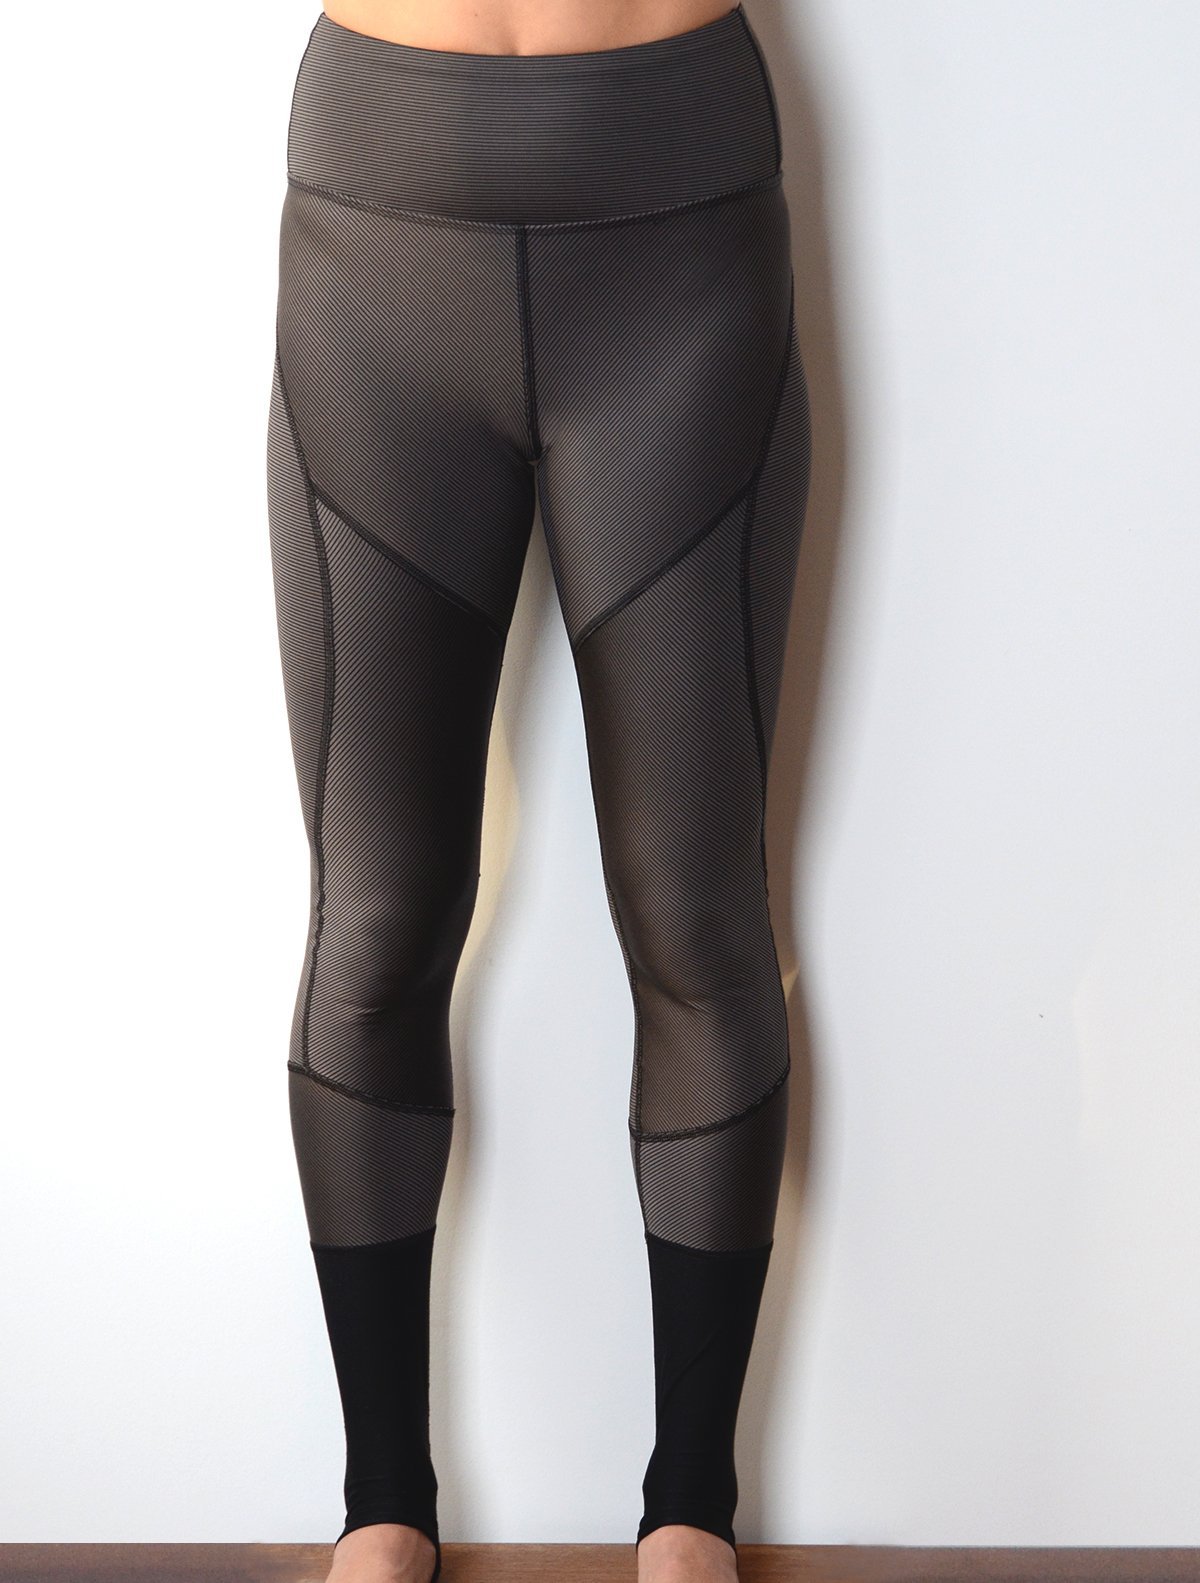 Front view of model wearing simulacra's women's full-length color block leggings in the grey/black stripe